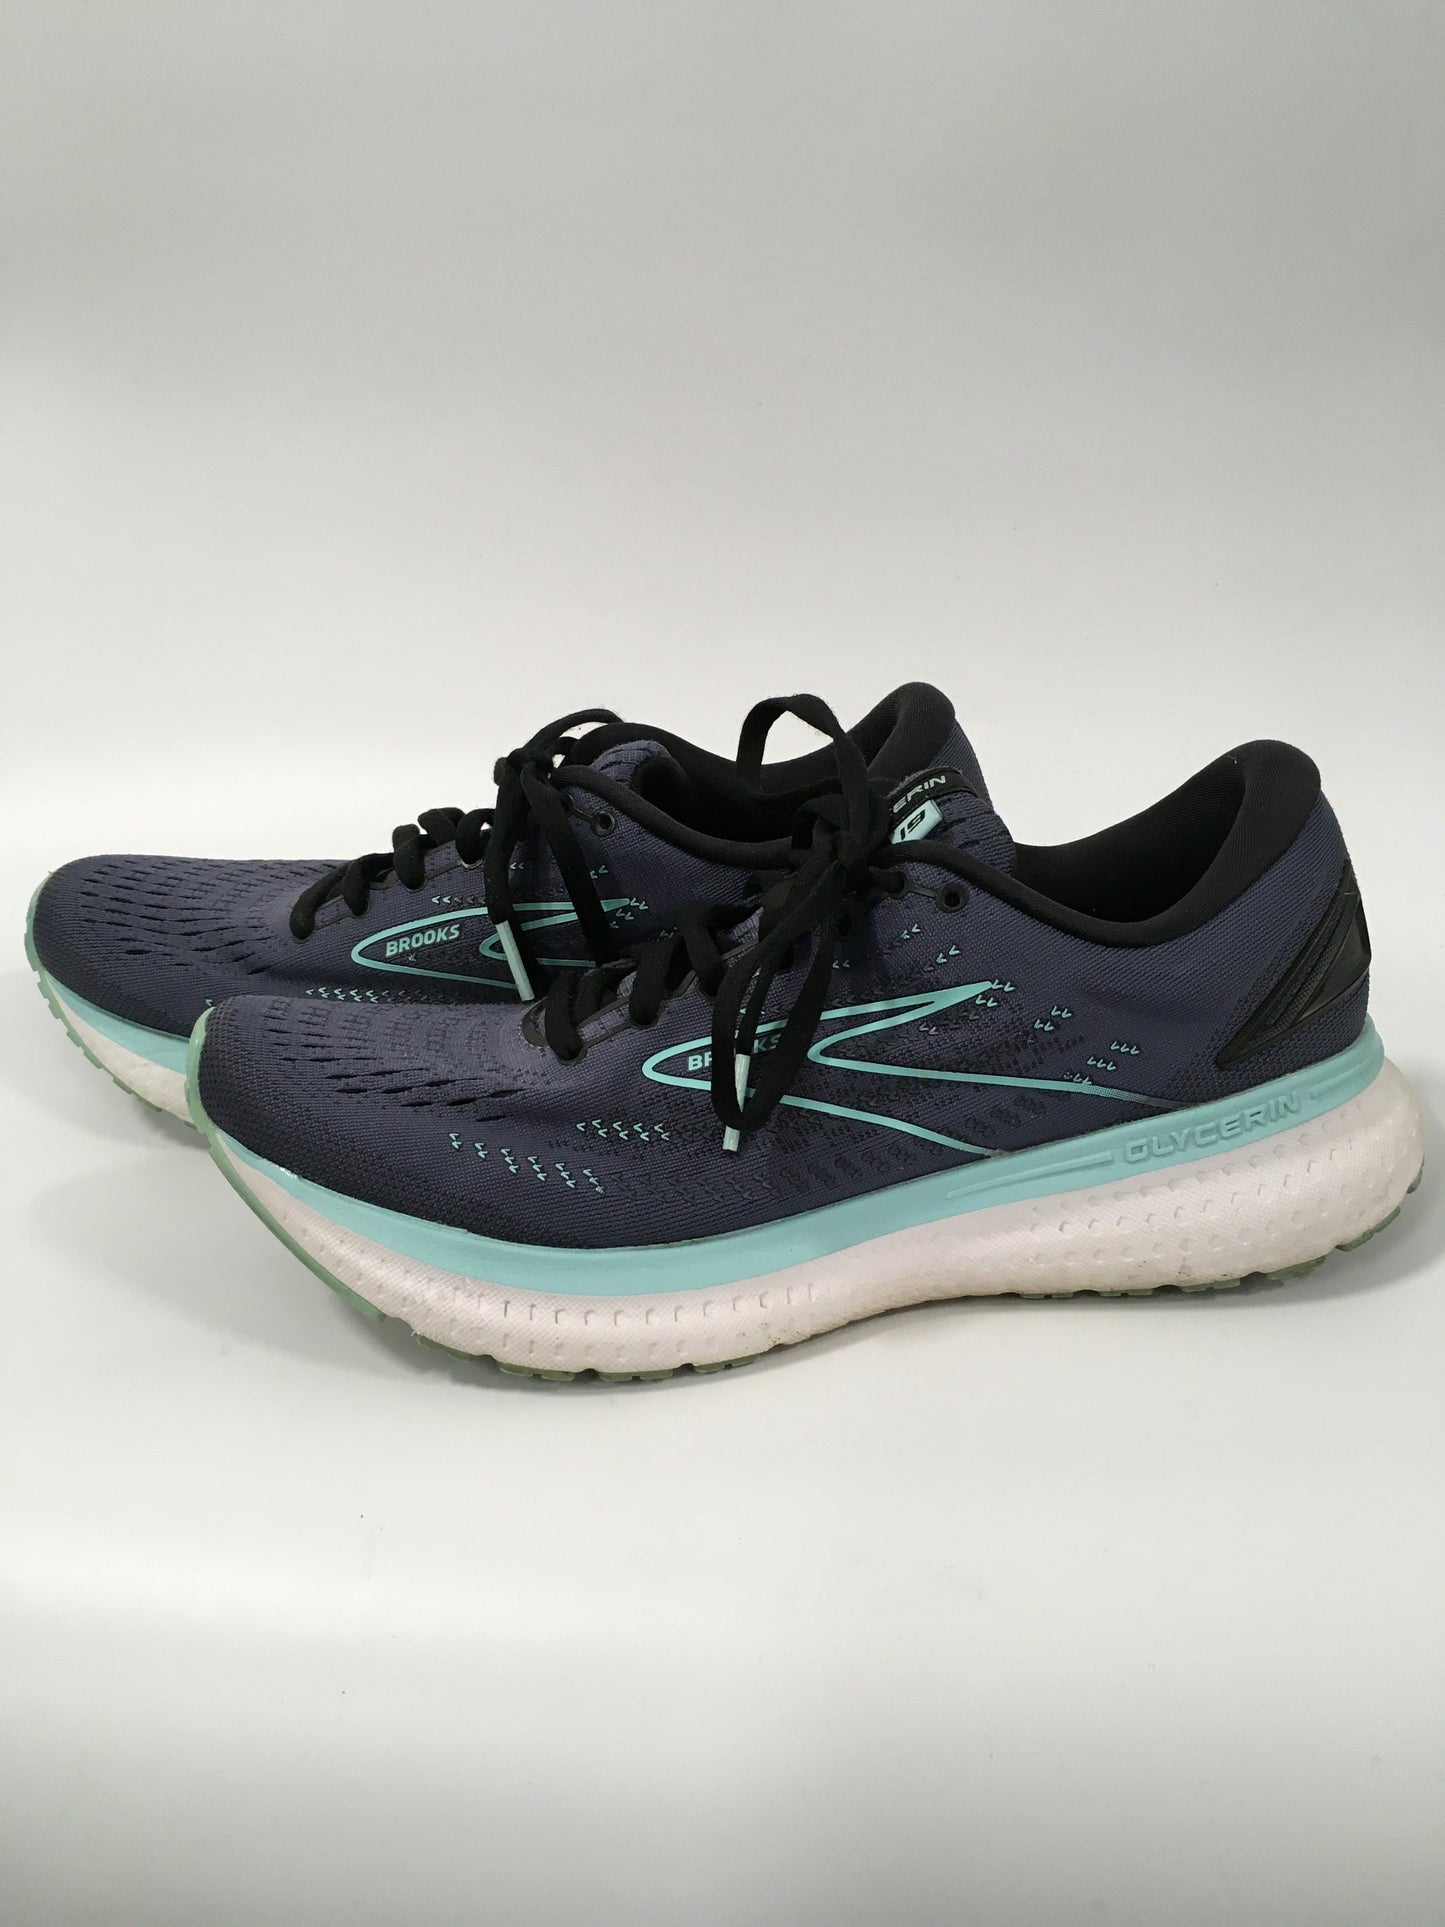 Blue Shoes Athletic Brooks, Size 8.5